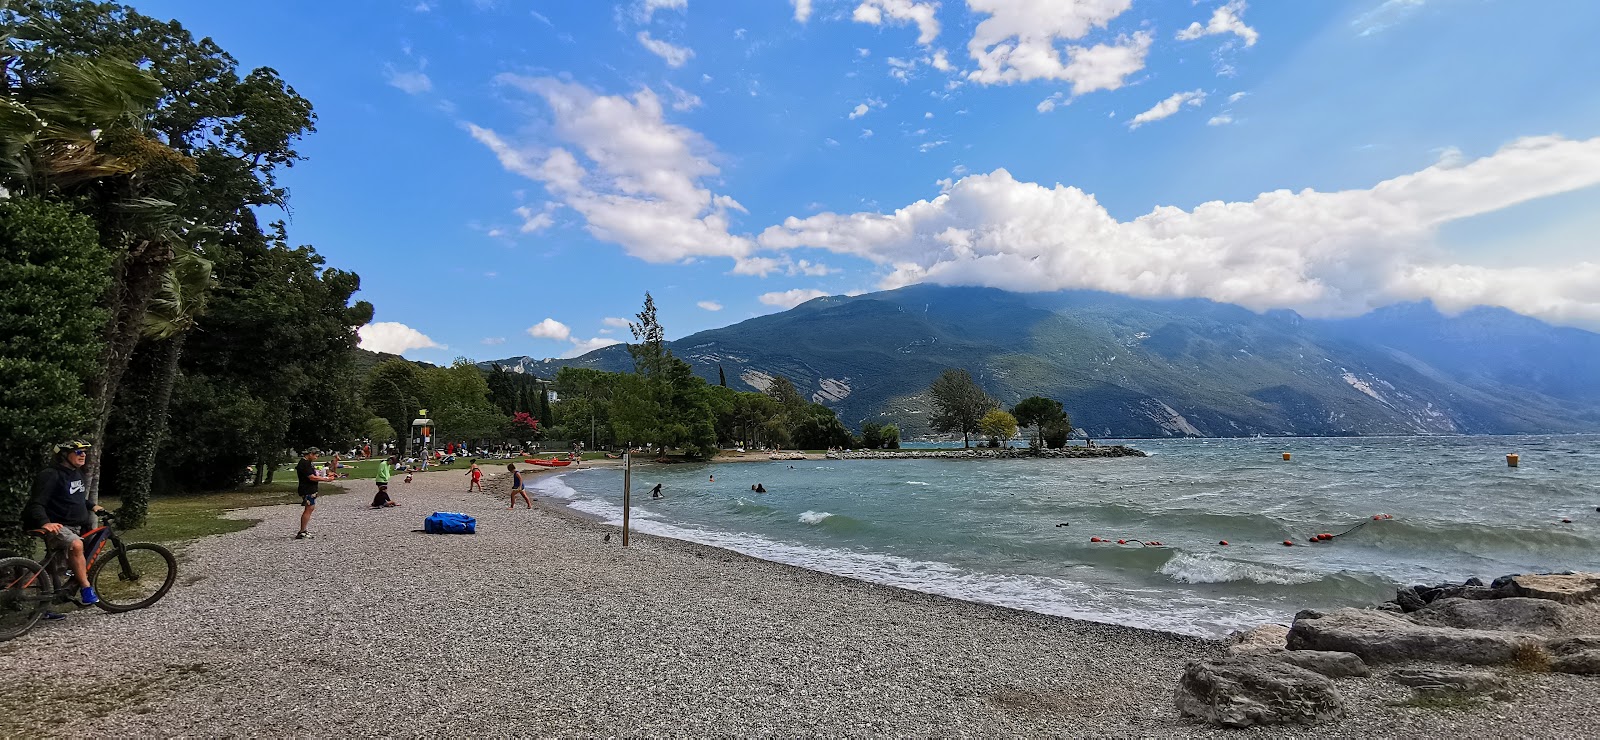 Foto de Spiaggia Riva del Garda con piedra superficie